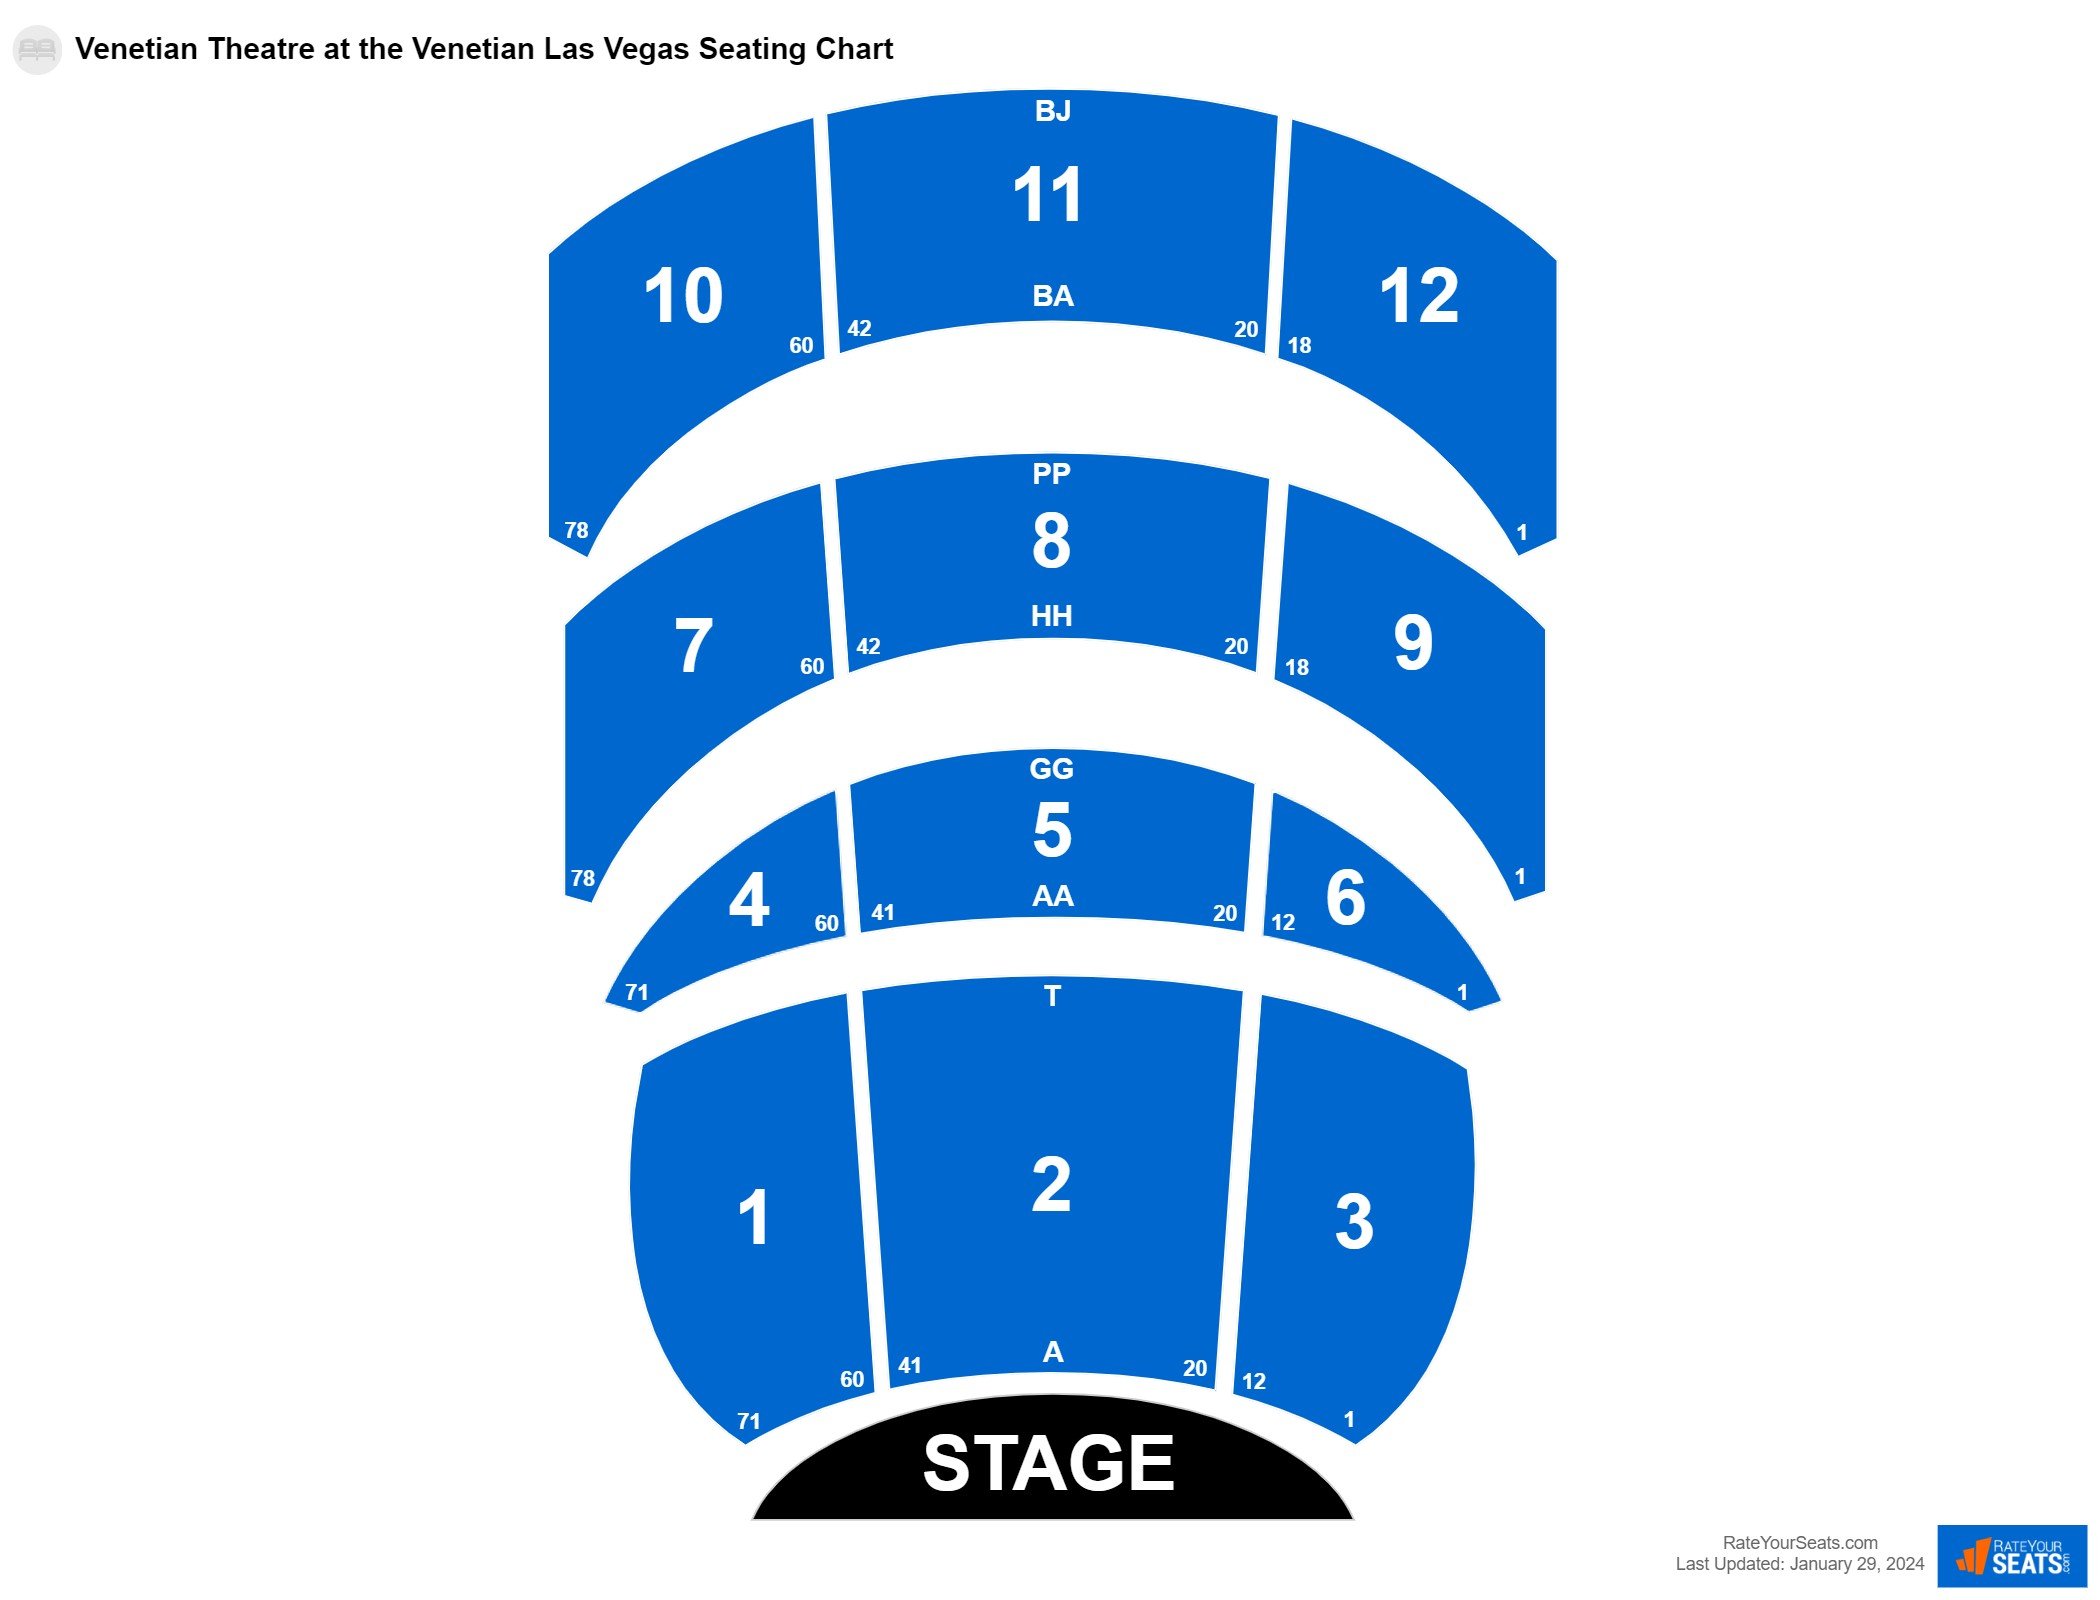 Comedy seating chart at Venetian Theatre at the Venetian Las Vegas